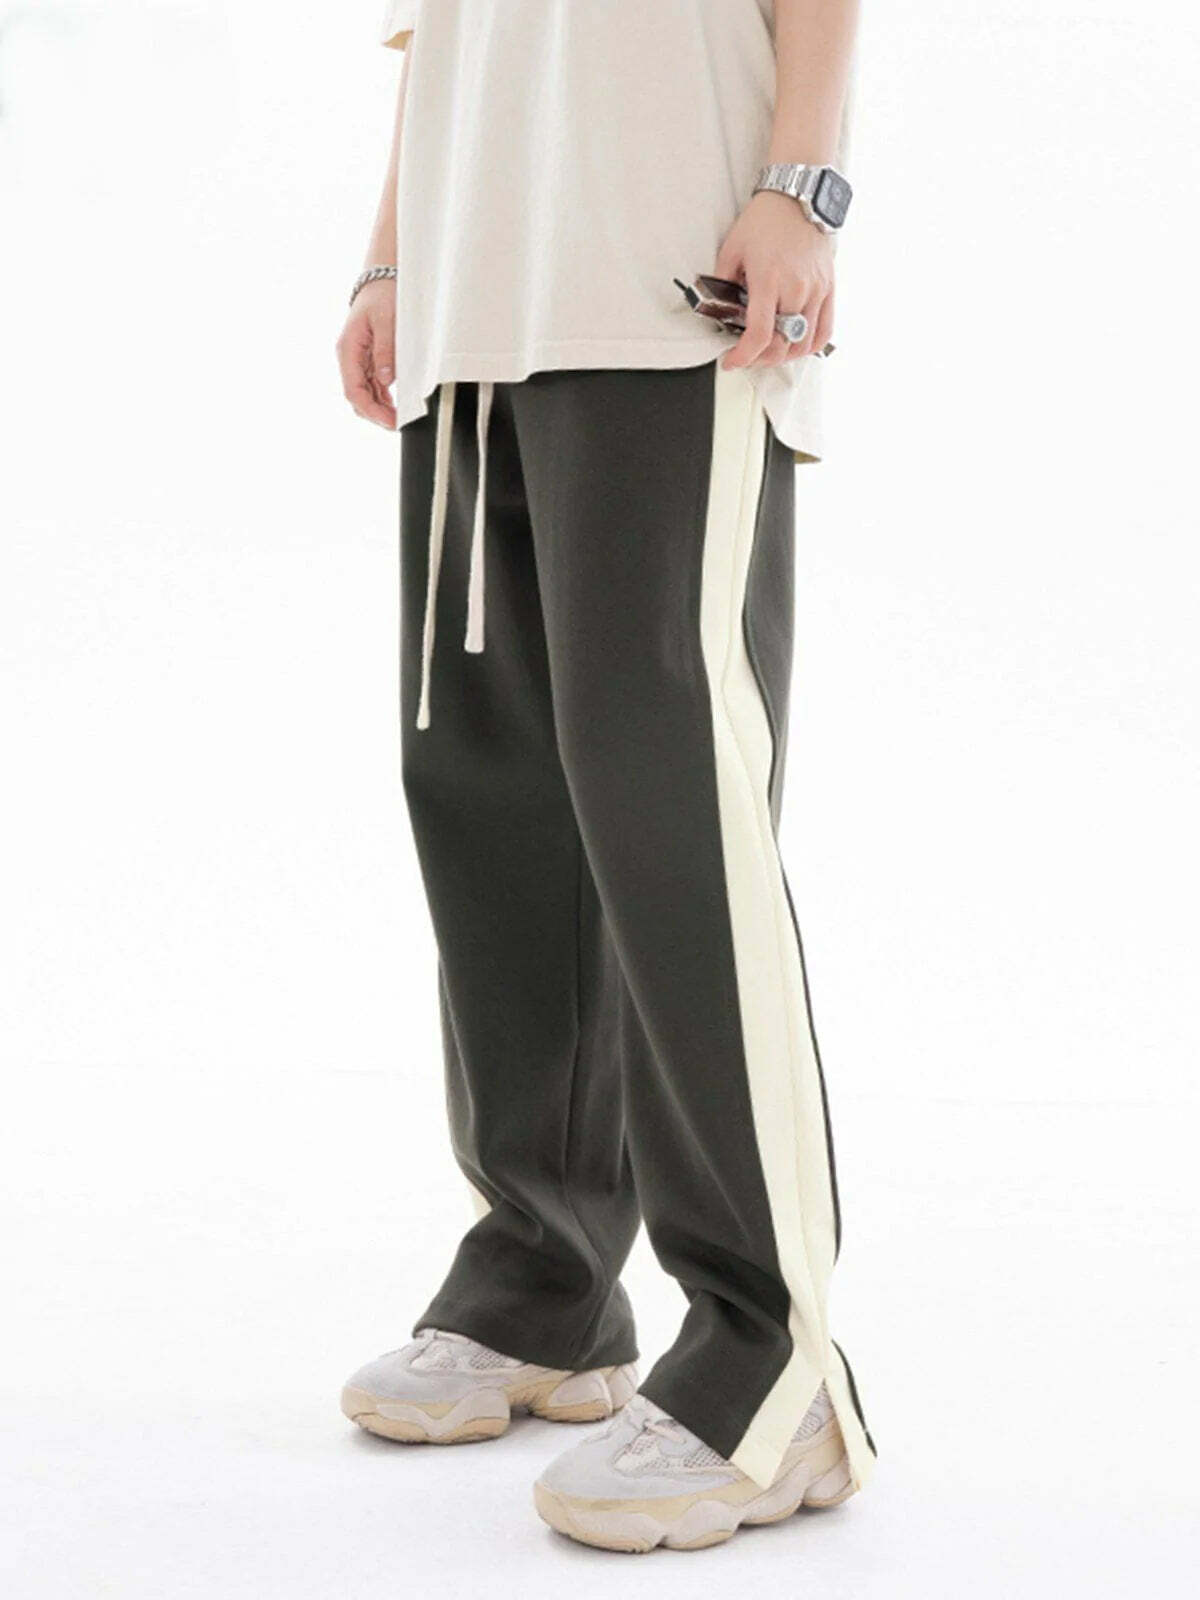 revolutionary split pants edgy patchwork design 5849